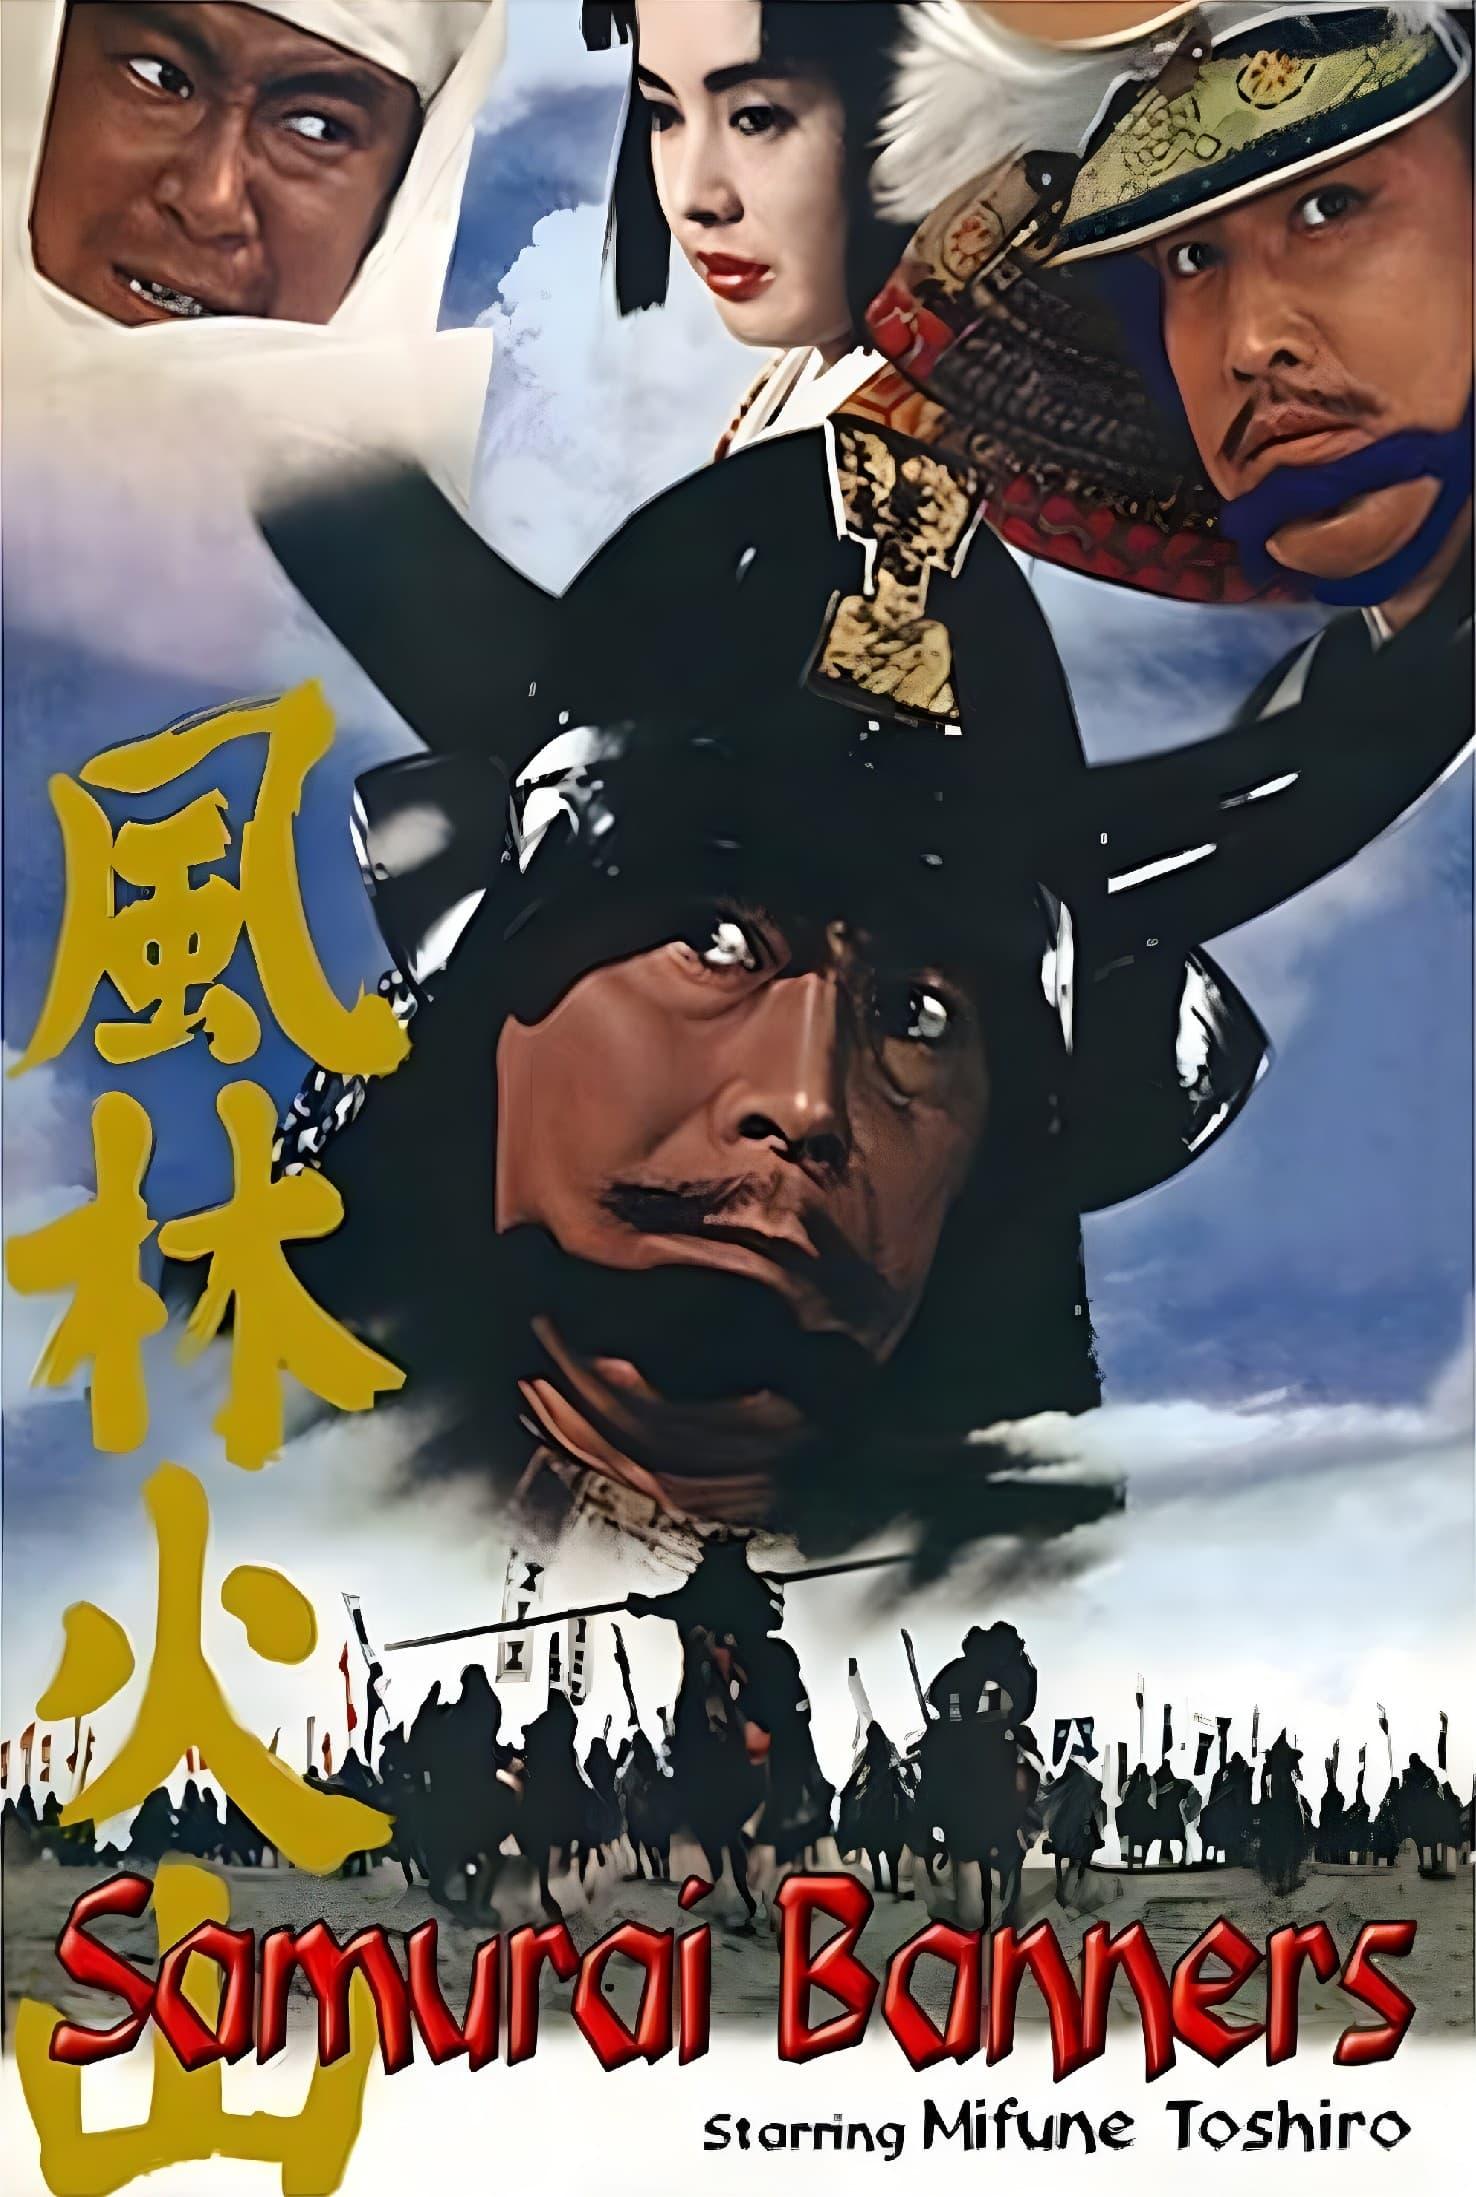 Samurai Banners poster